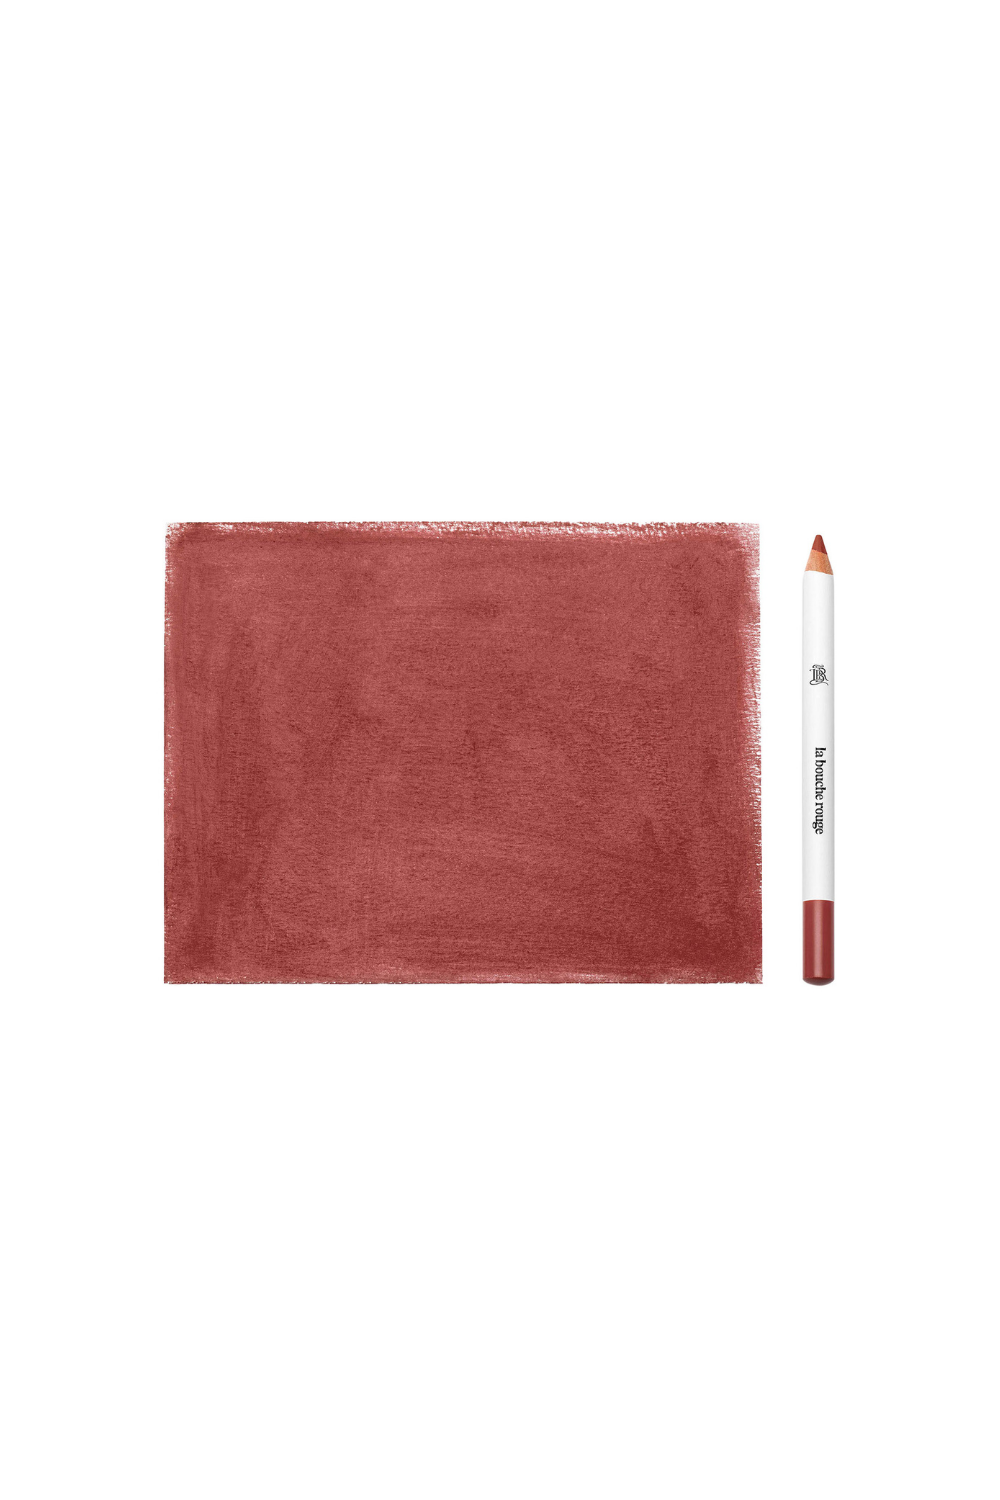 La Bouche Rouge Nude Brown Lip Pencil